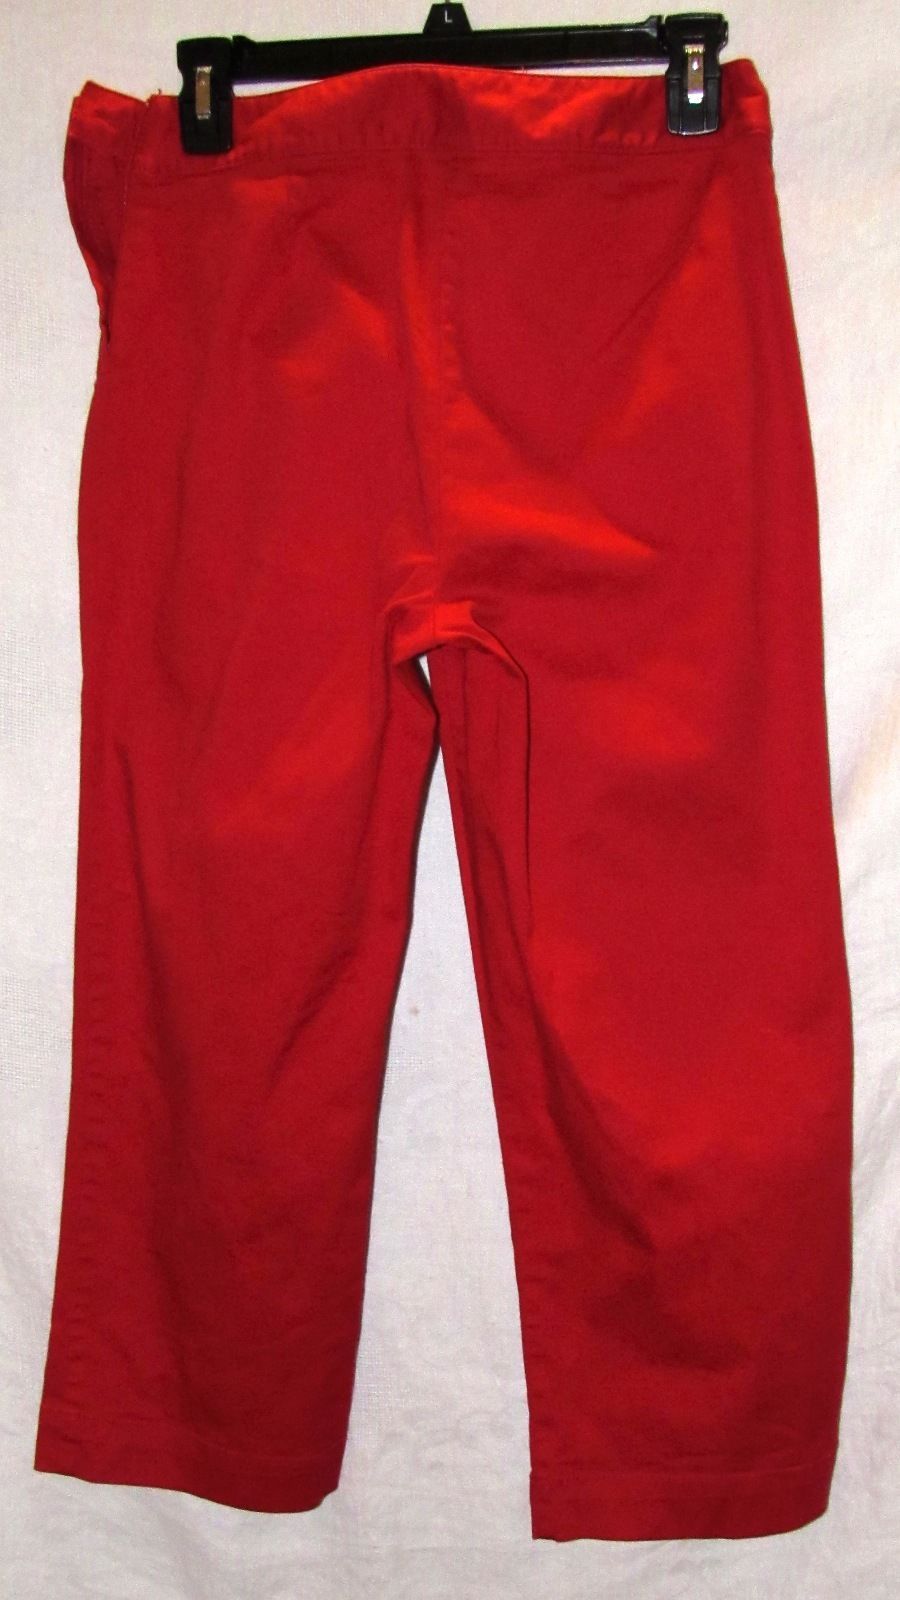 Liz Claiborne Red Audra Capri/Cropped Cotton/Spandex Pants Inseam 22 ...